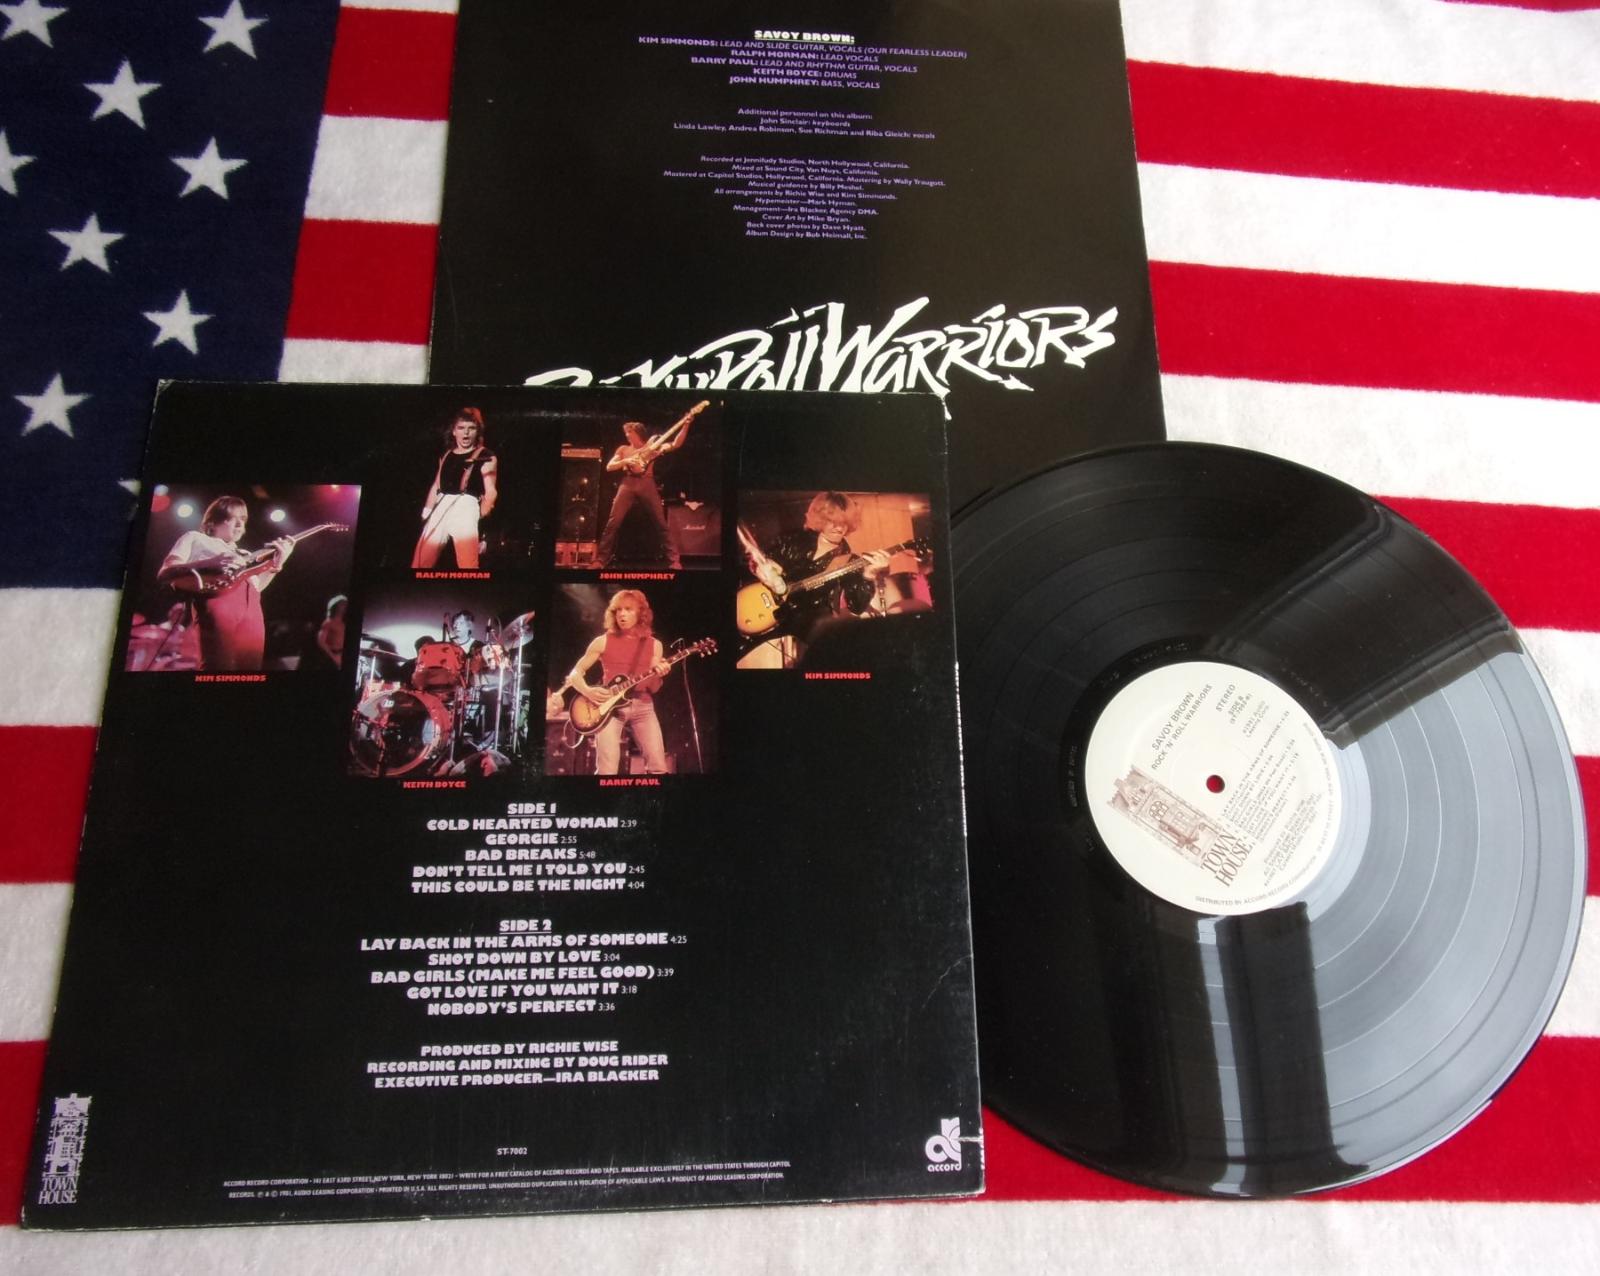 ☠️ LP: SAVOY BROWN - ROCK 'N' ROLL WARRIORS, jako nová 1press USA 1981 - LP / Vinylové desky